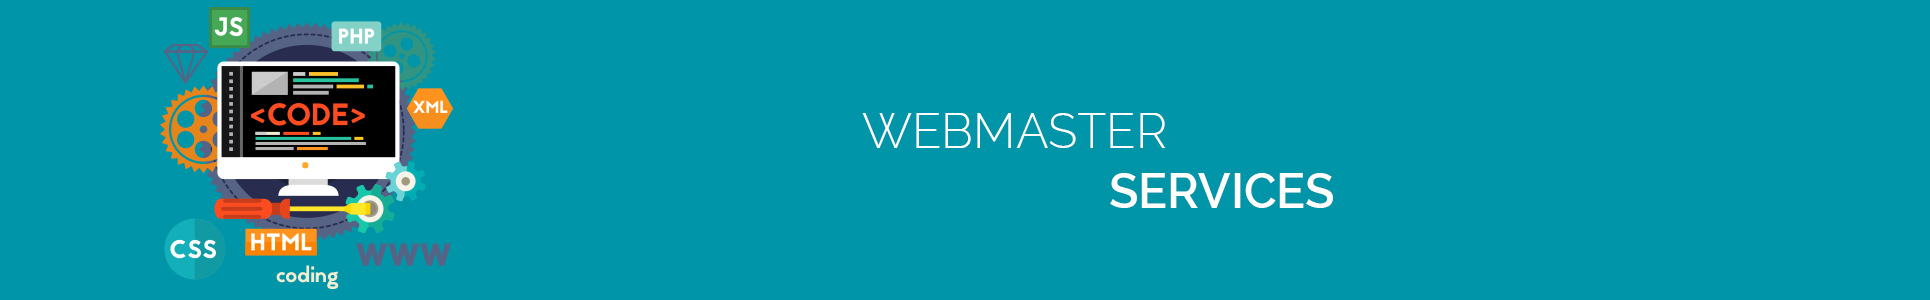 webmaster services